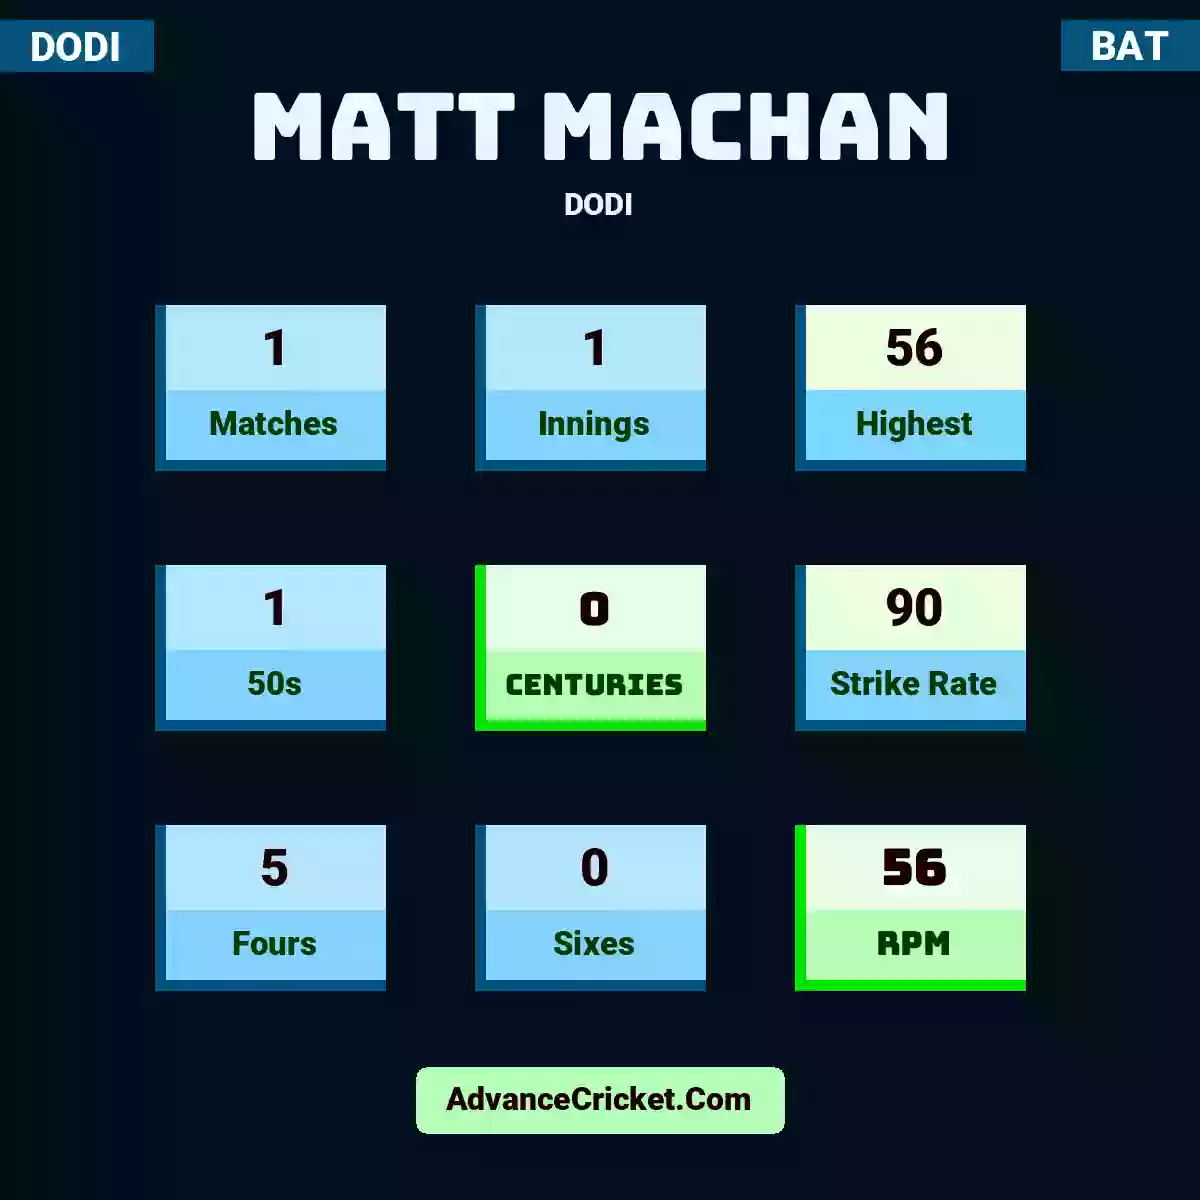 Matt Machan DODI , Matt Machan played 1 matches, scored 56 runs as highest, 1 half-centuries, and 0 centuries, with a strike rate of 90. M.Machan hit 5 fours and 0 sixes, with an RPM of 56.